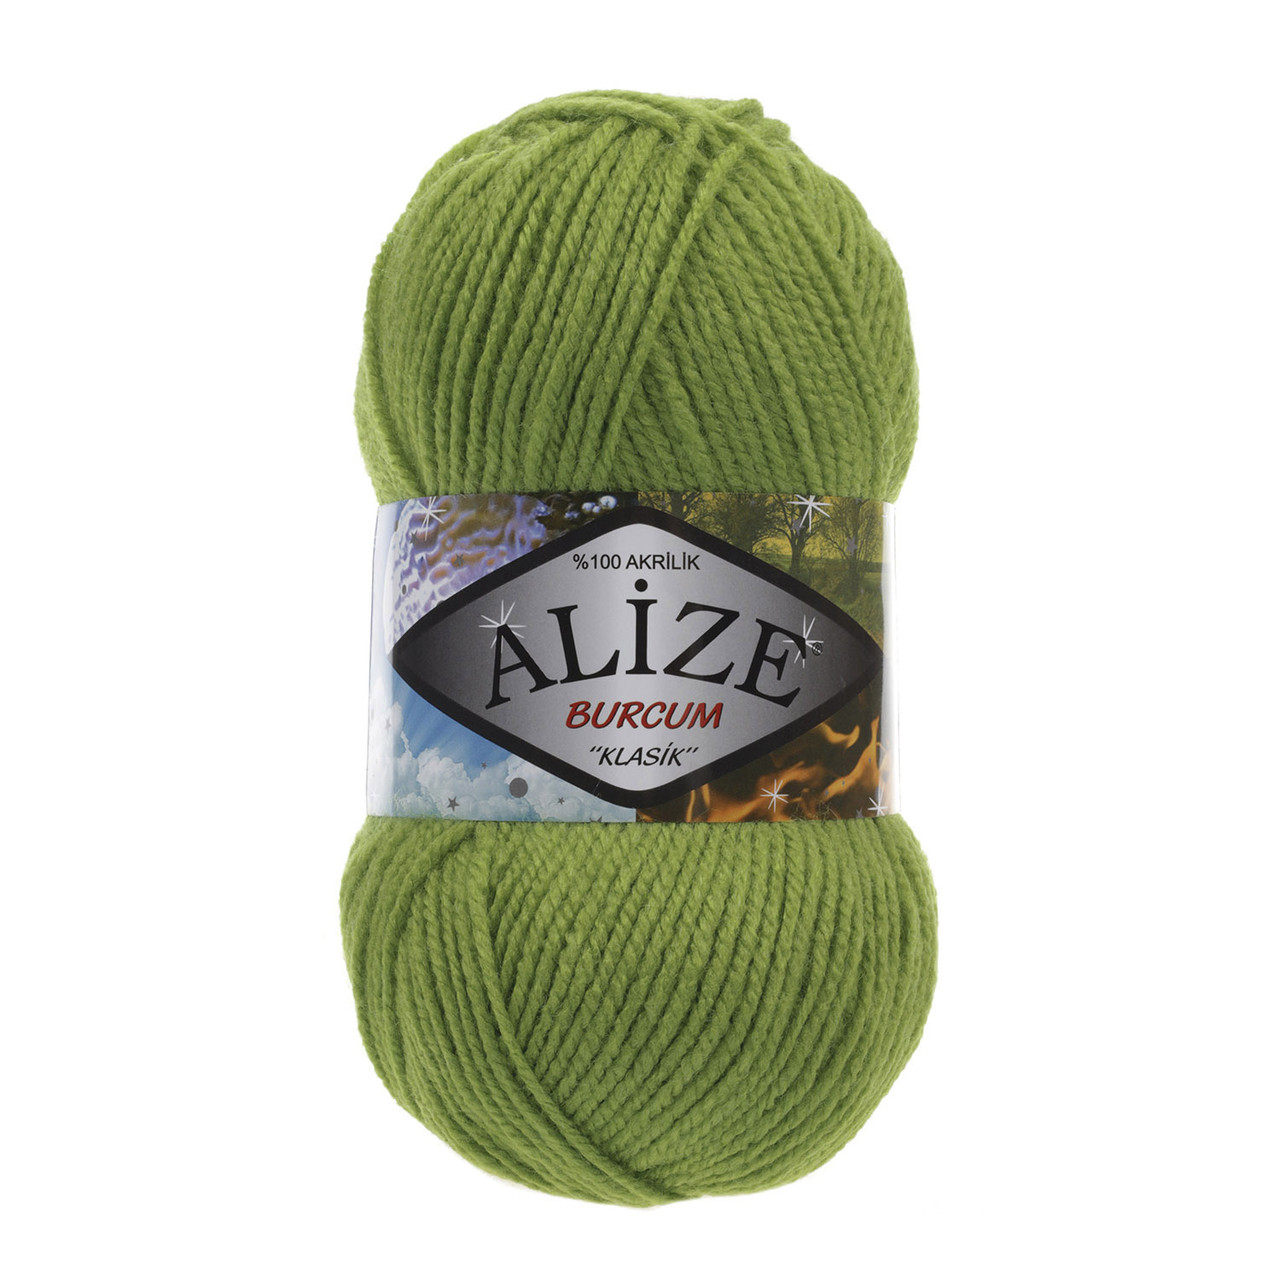 Alize Burcum Klasik 210 зелене яблуко (пряжа алізе буркум класік)